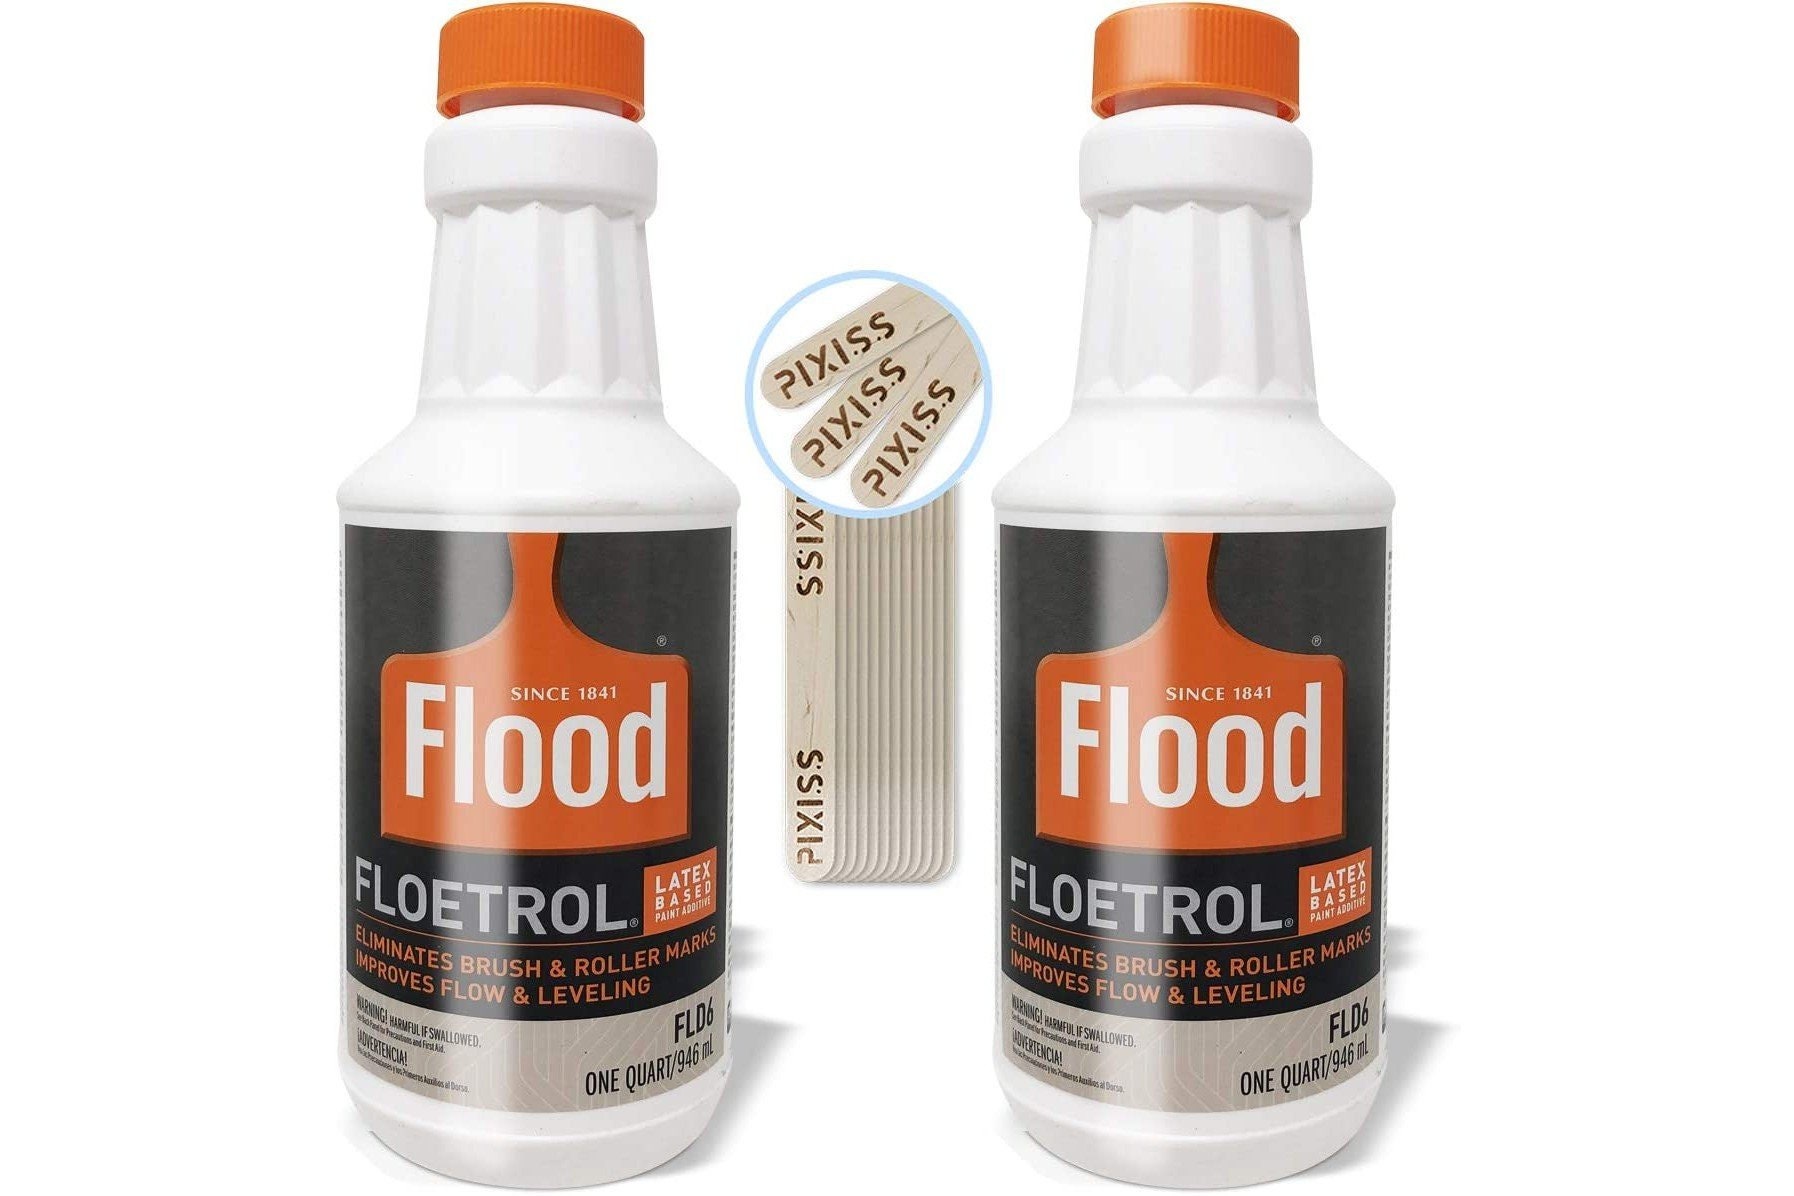 FLOOD FLOETROL Latex-Based Paint Additive - Professional Quality